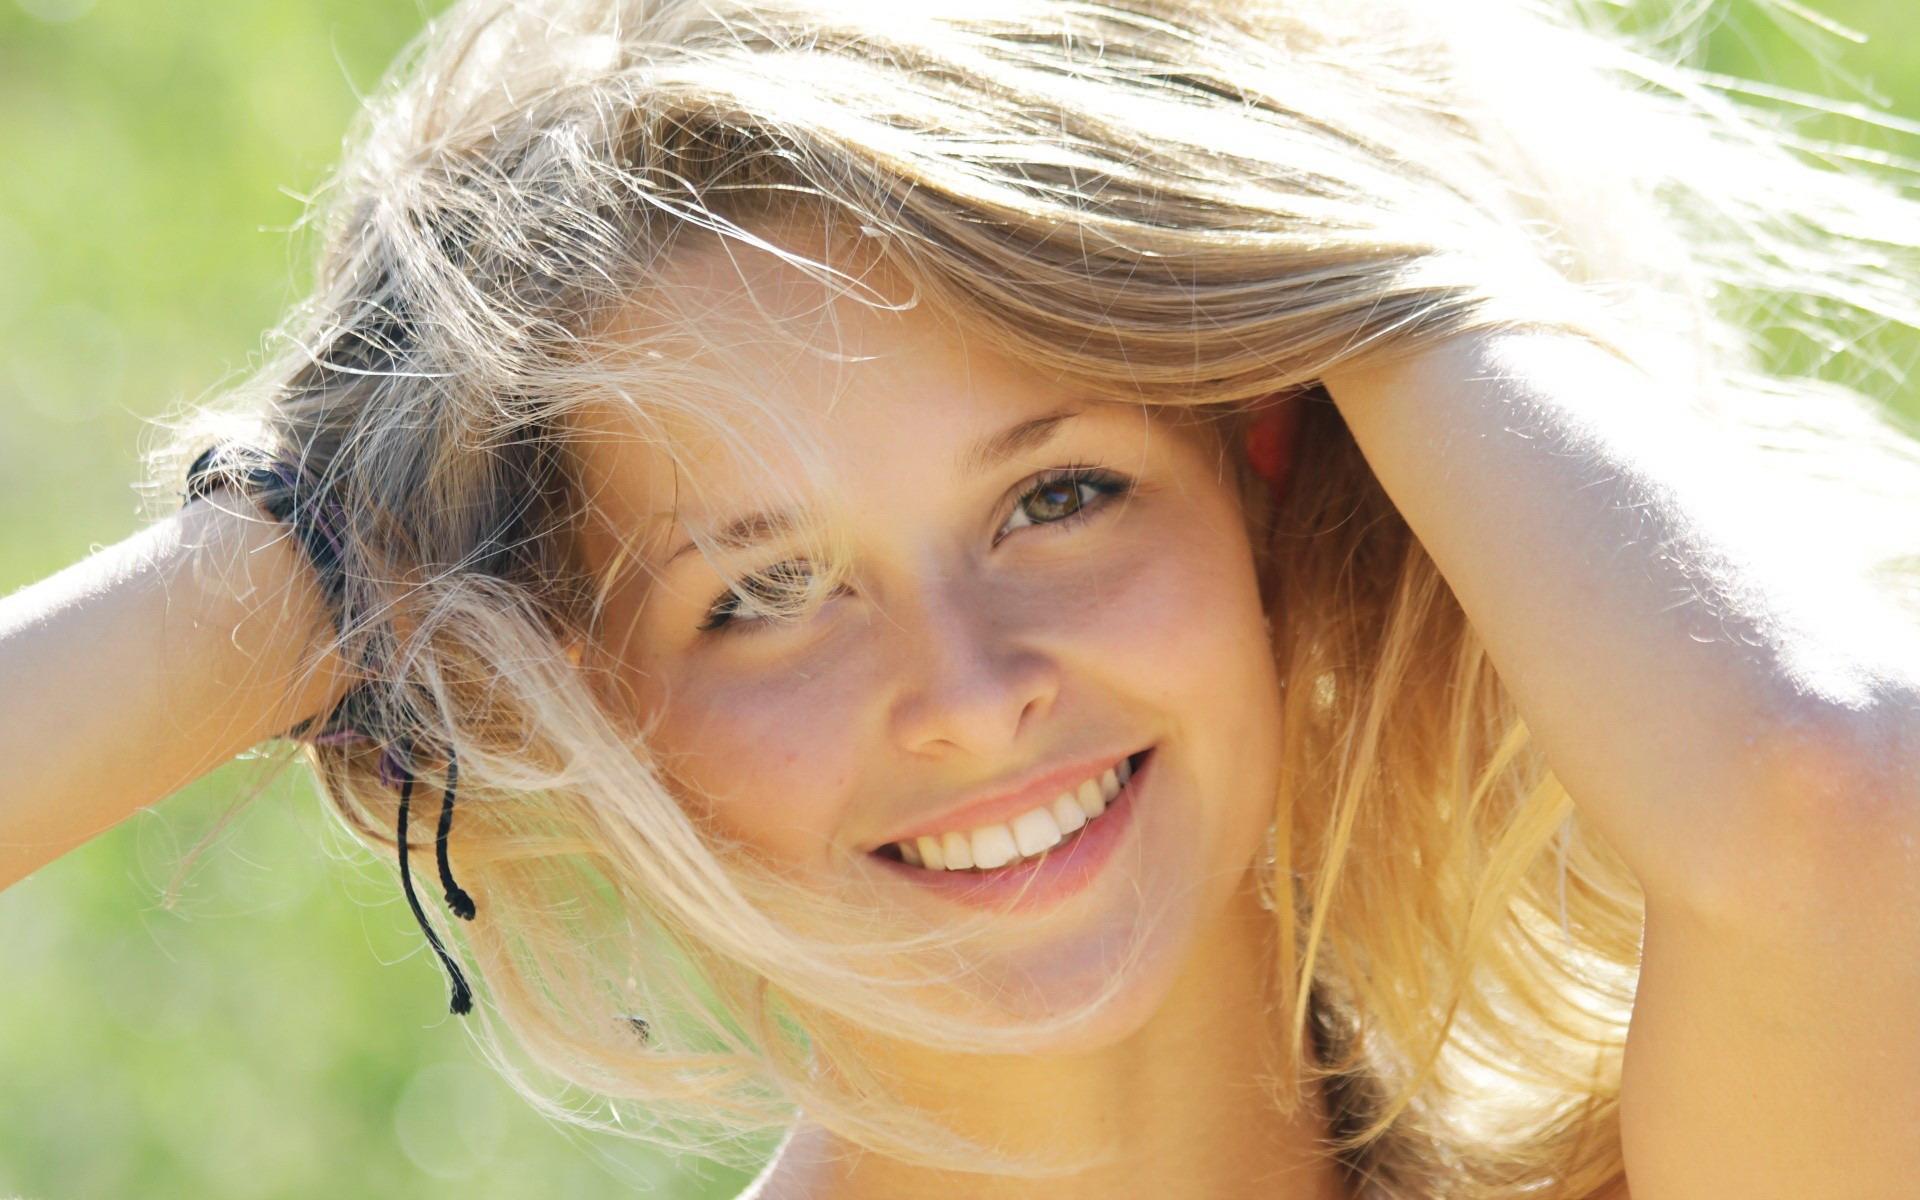 Models Teen Young Smiling Wallpaper Windows Desktop